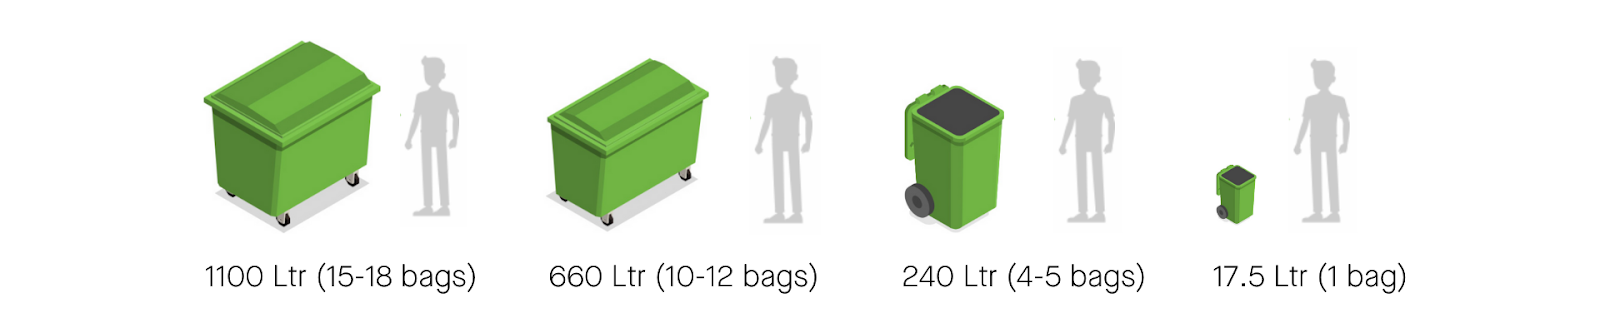 waste disposal bin size comparison